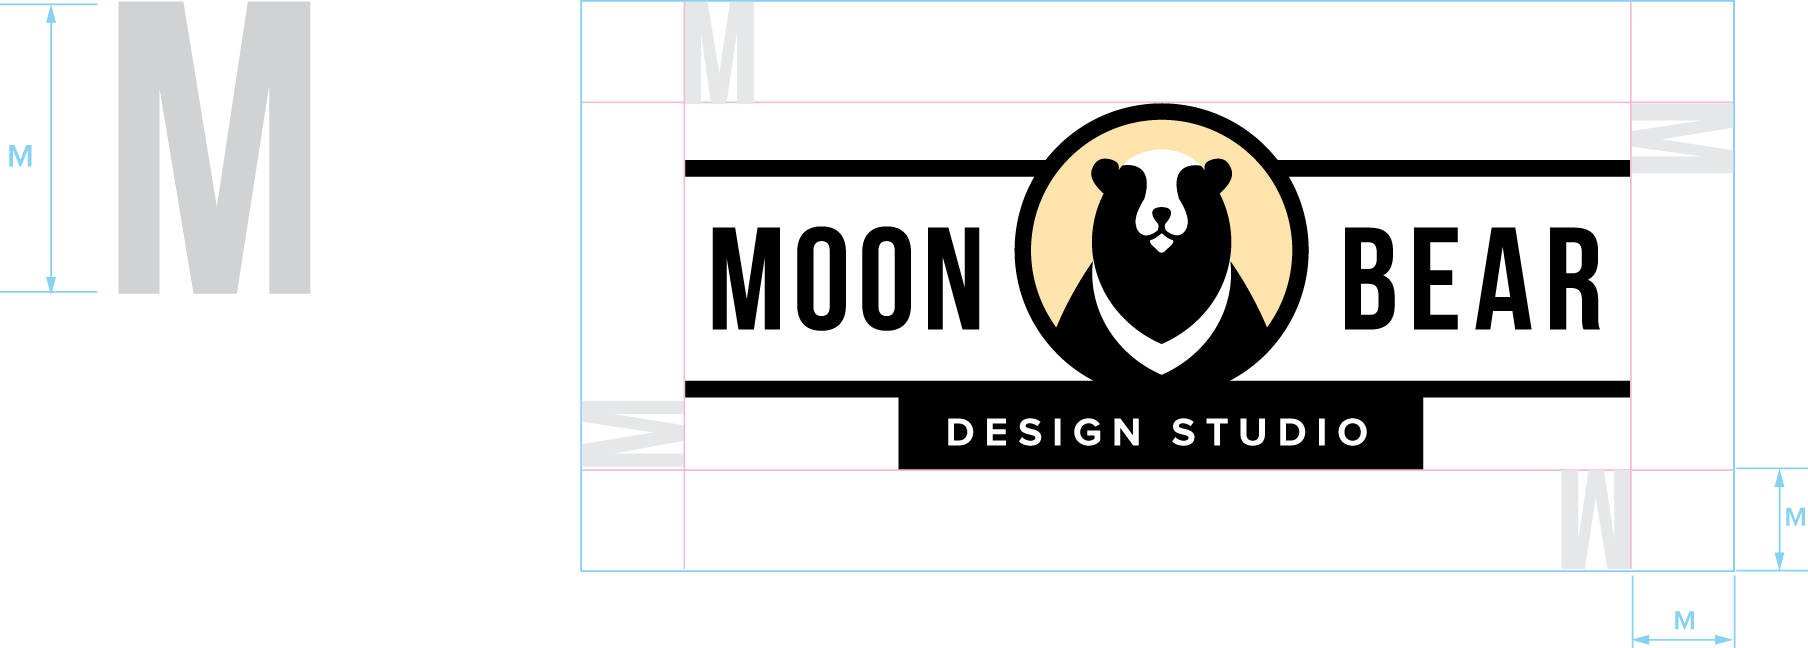 Moon Bear Design Studio Logo Clear space